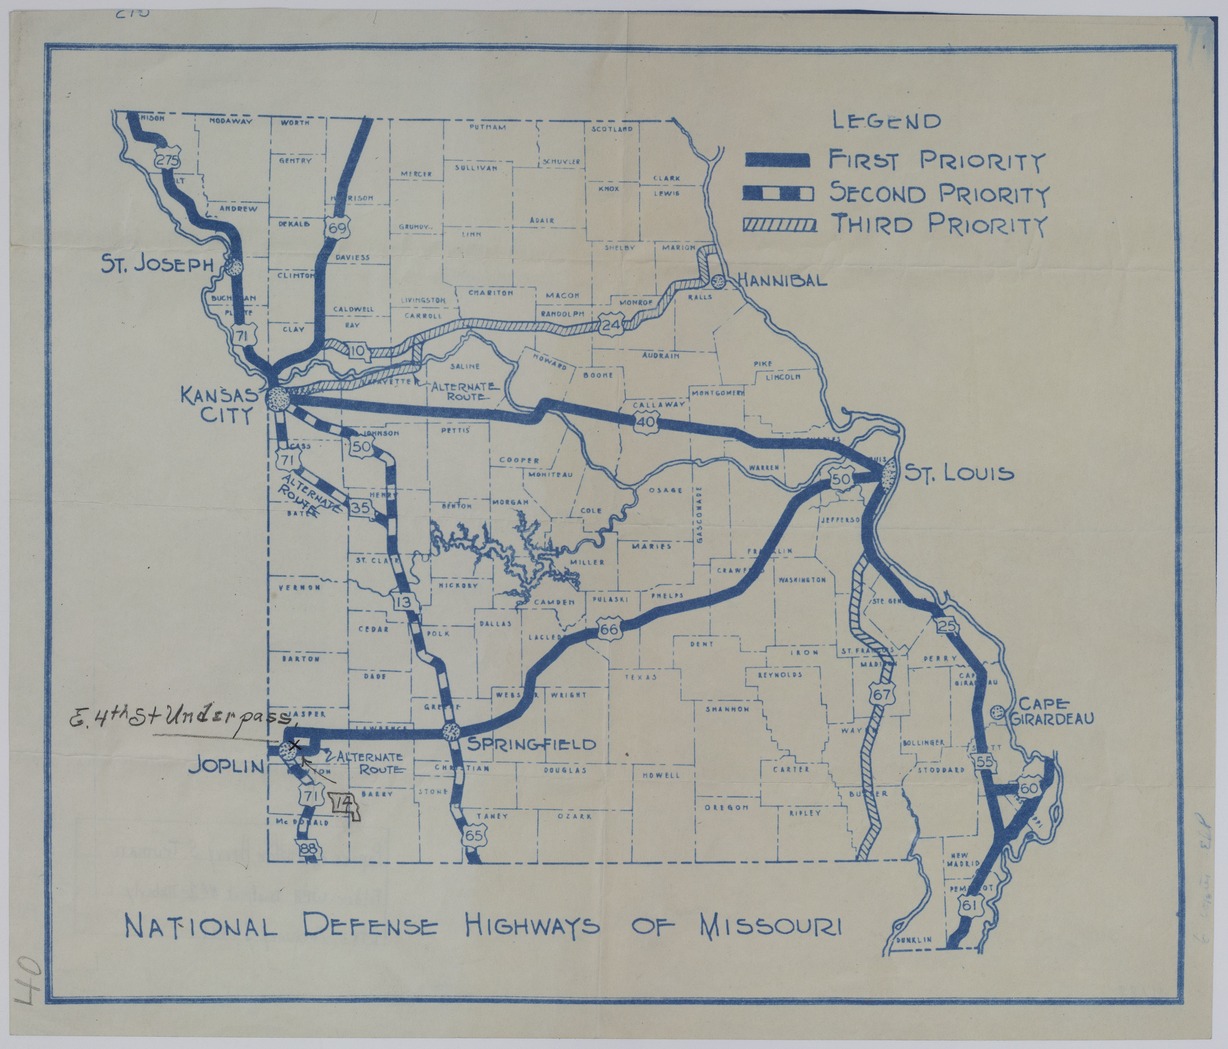 Map of National Defense Highways in Missouri